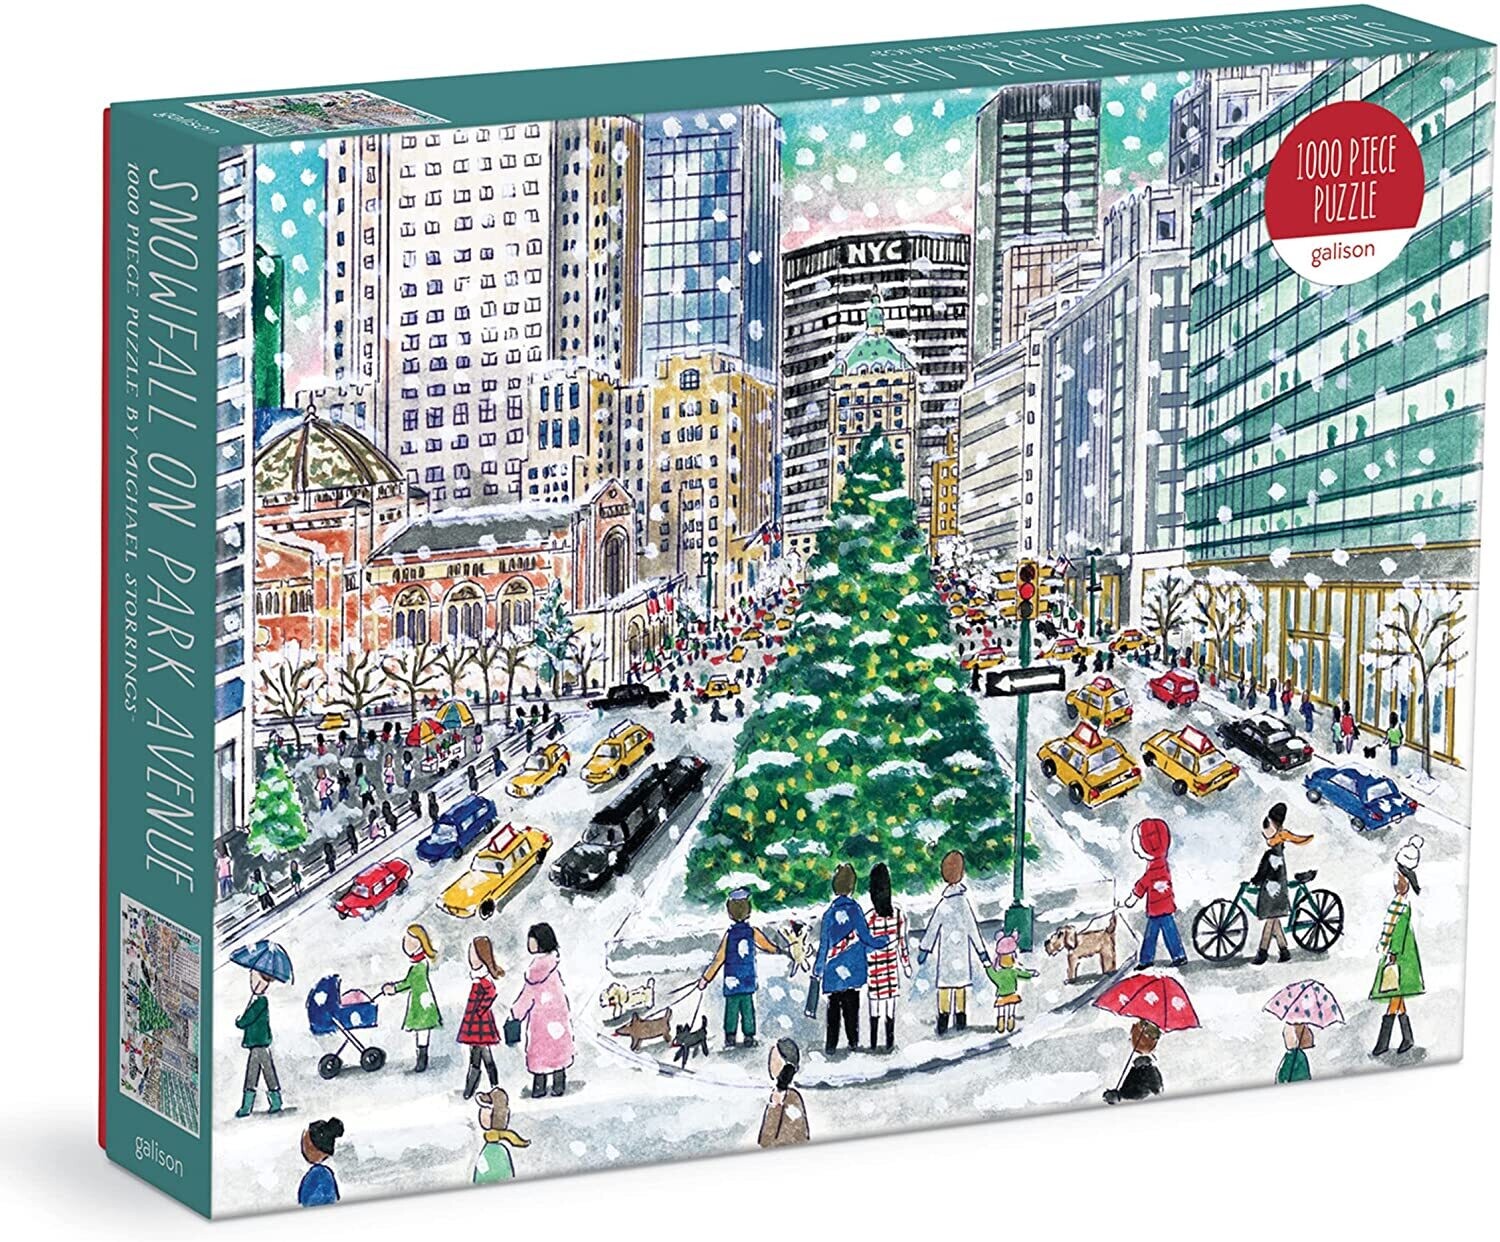 Snowfall On Park Avenue Michael Storrings 1000 Piece Puzzle